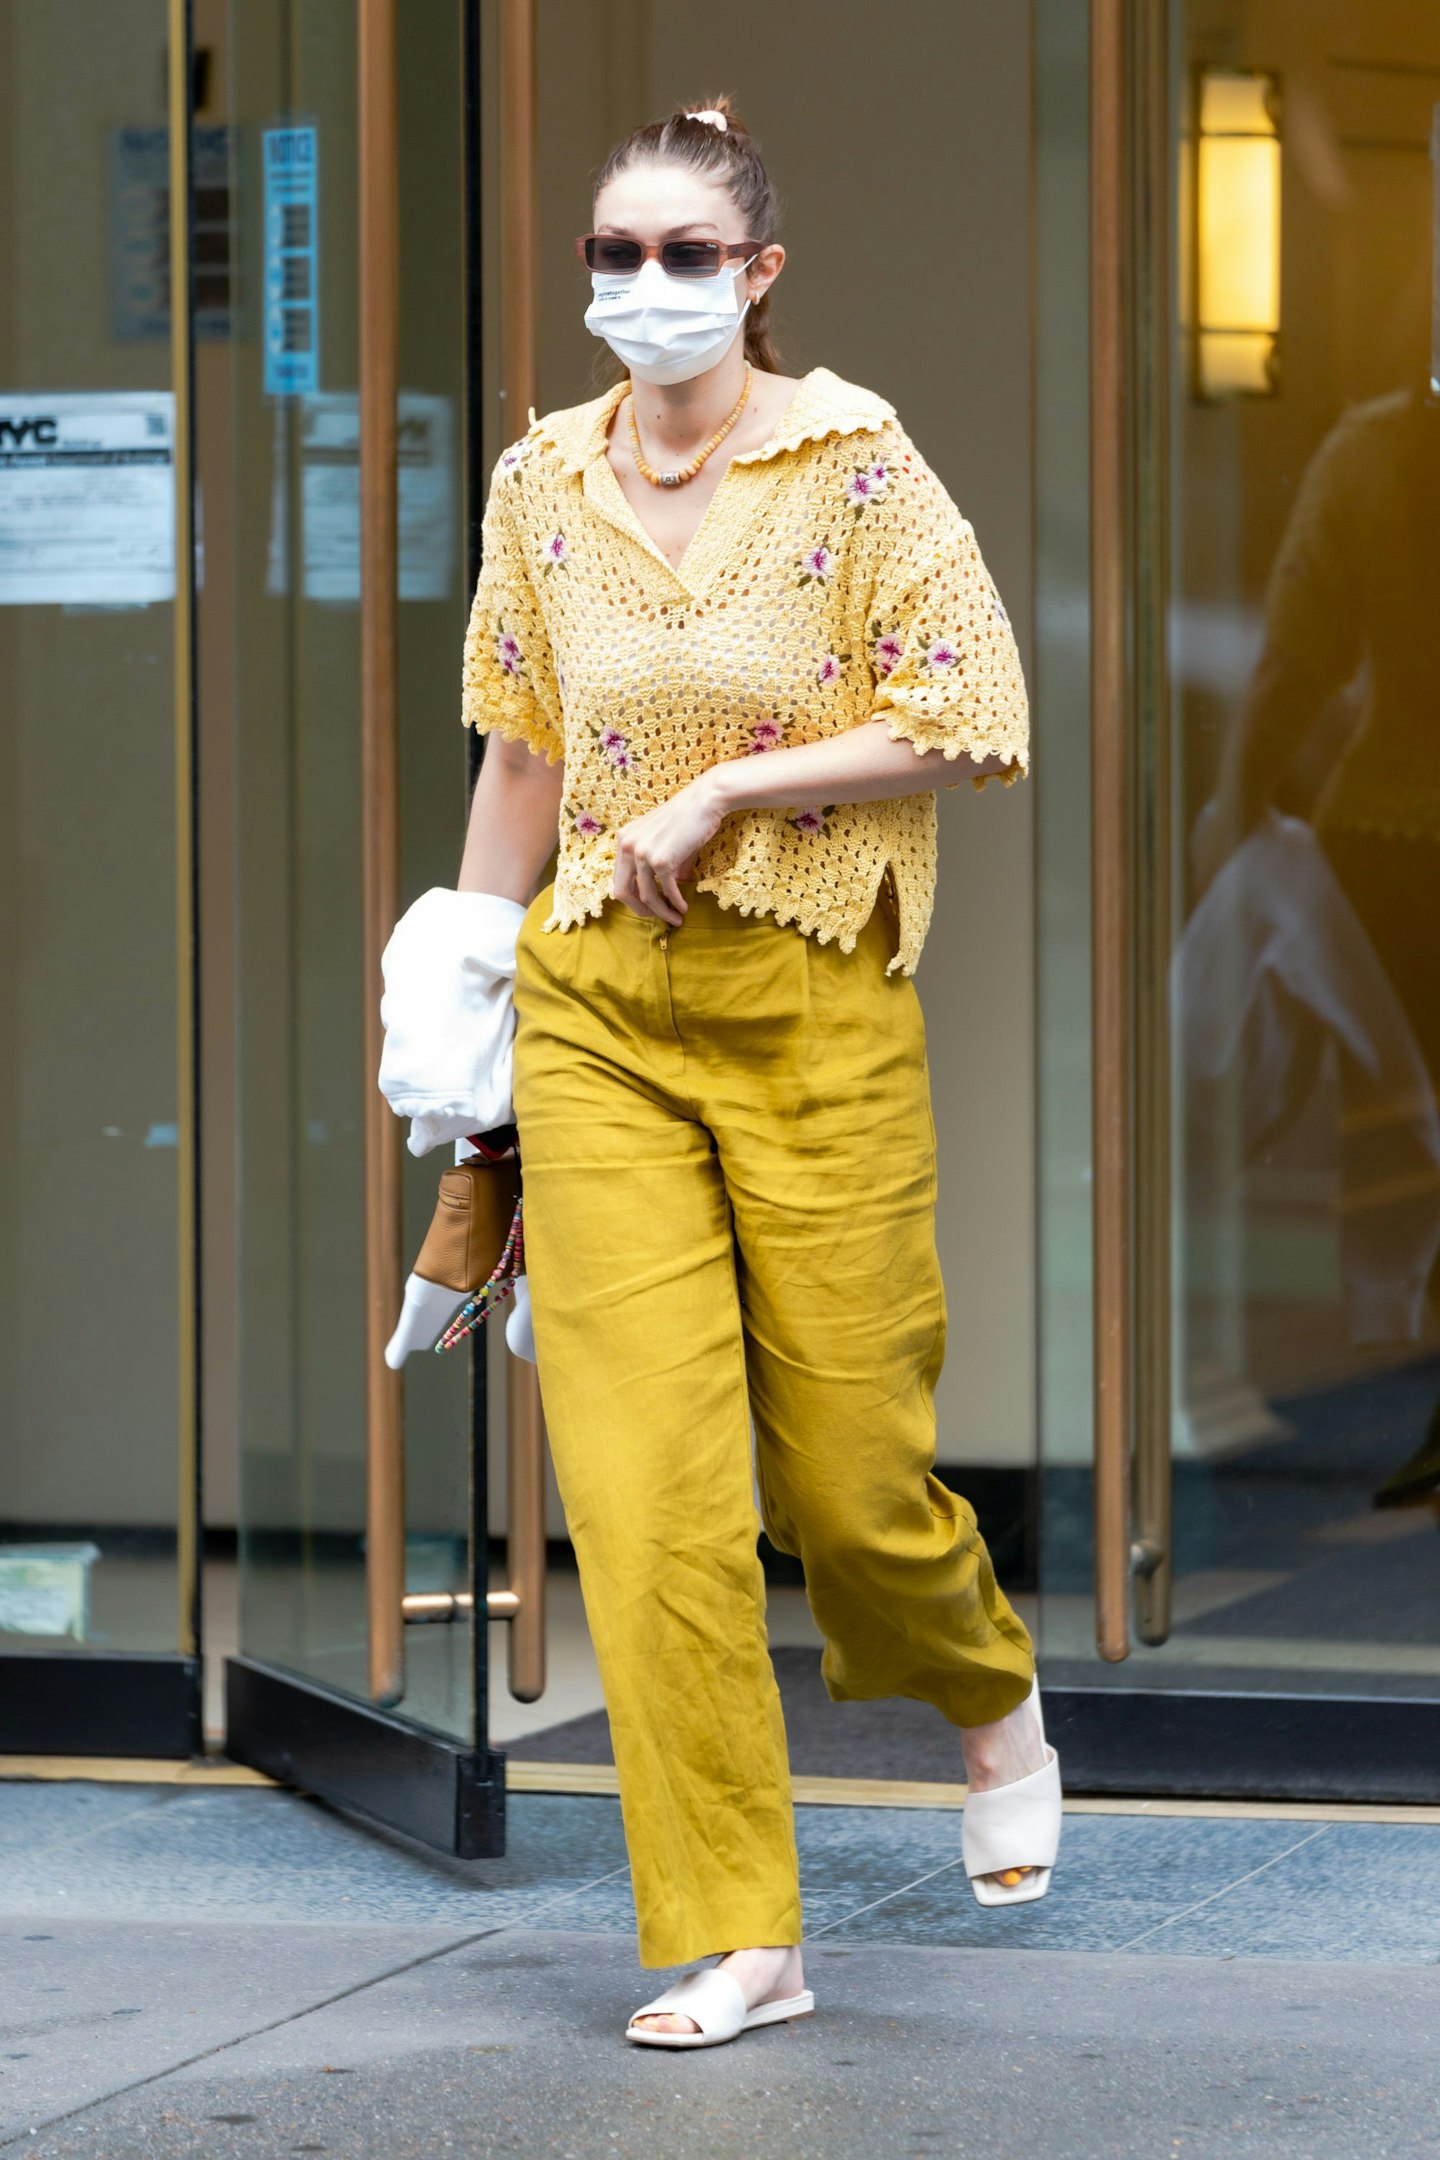 Gigi Hadid wearing a crocheted polo shirt from Mango